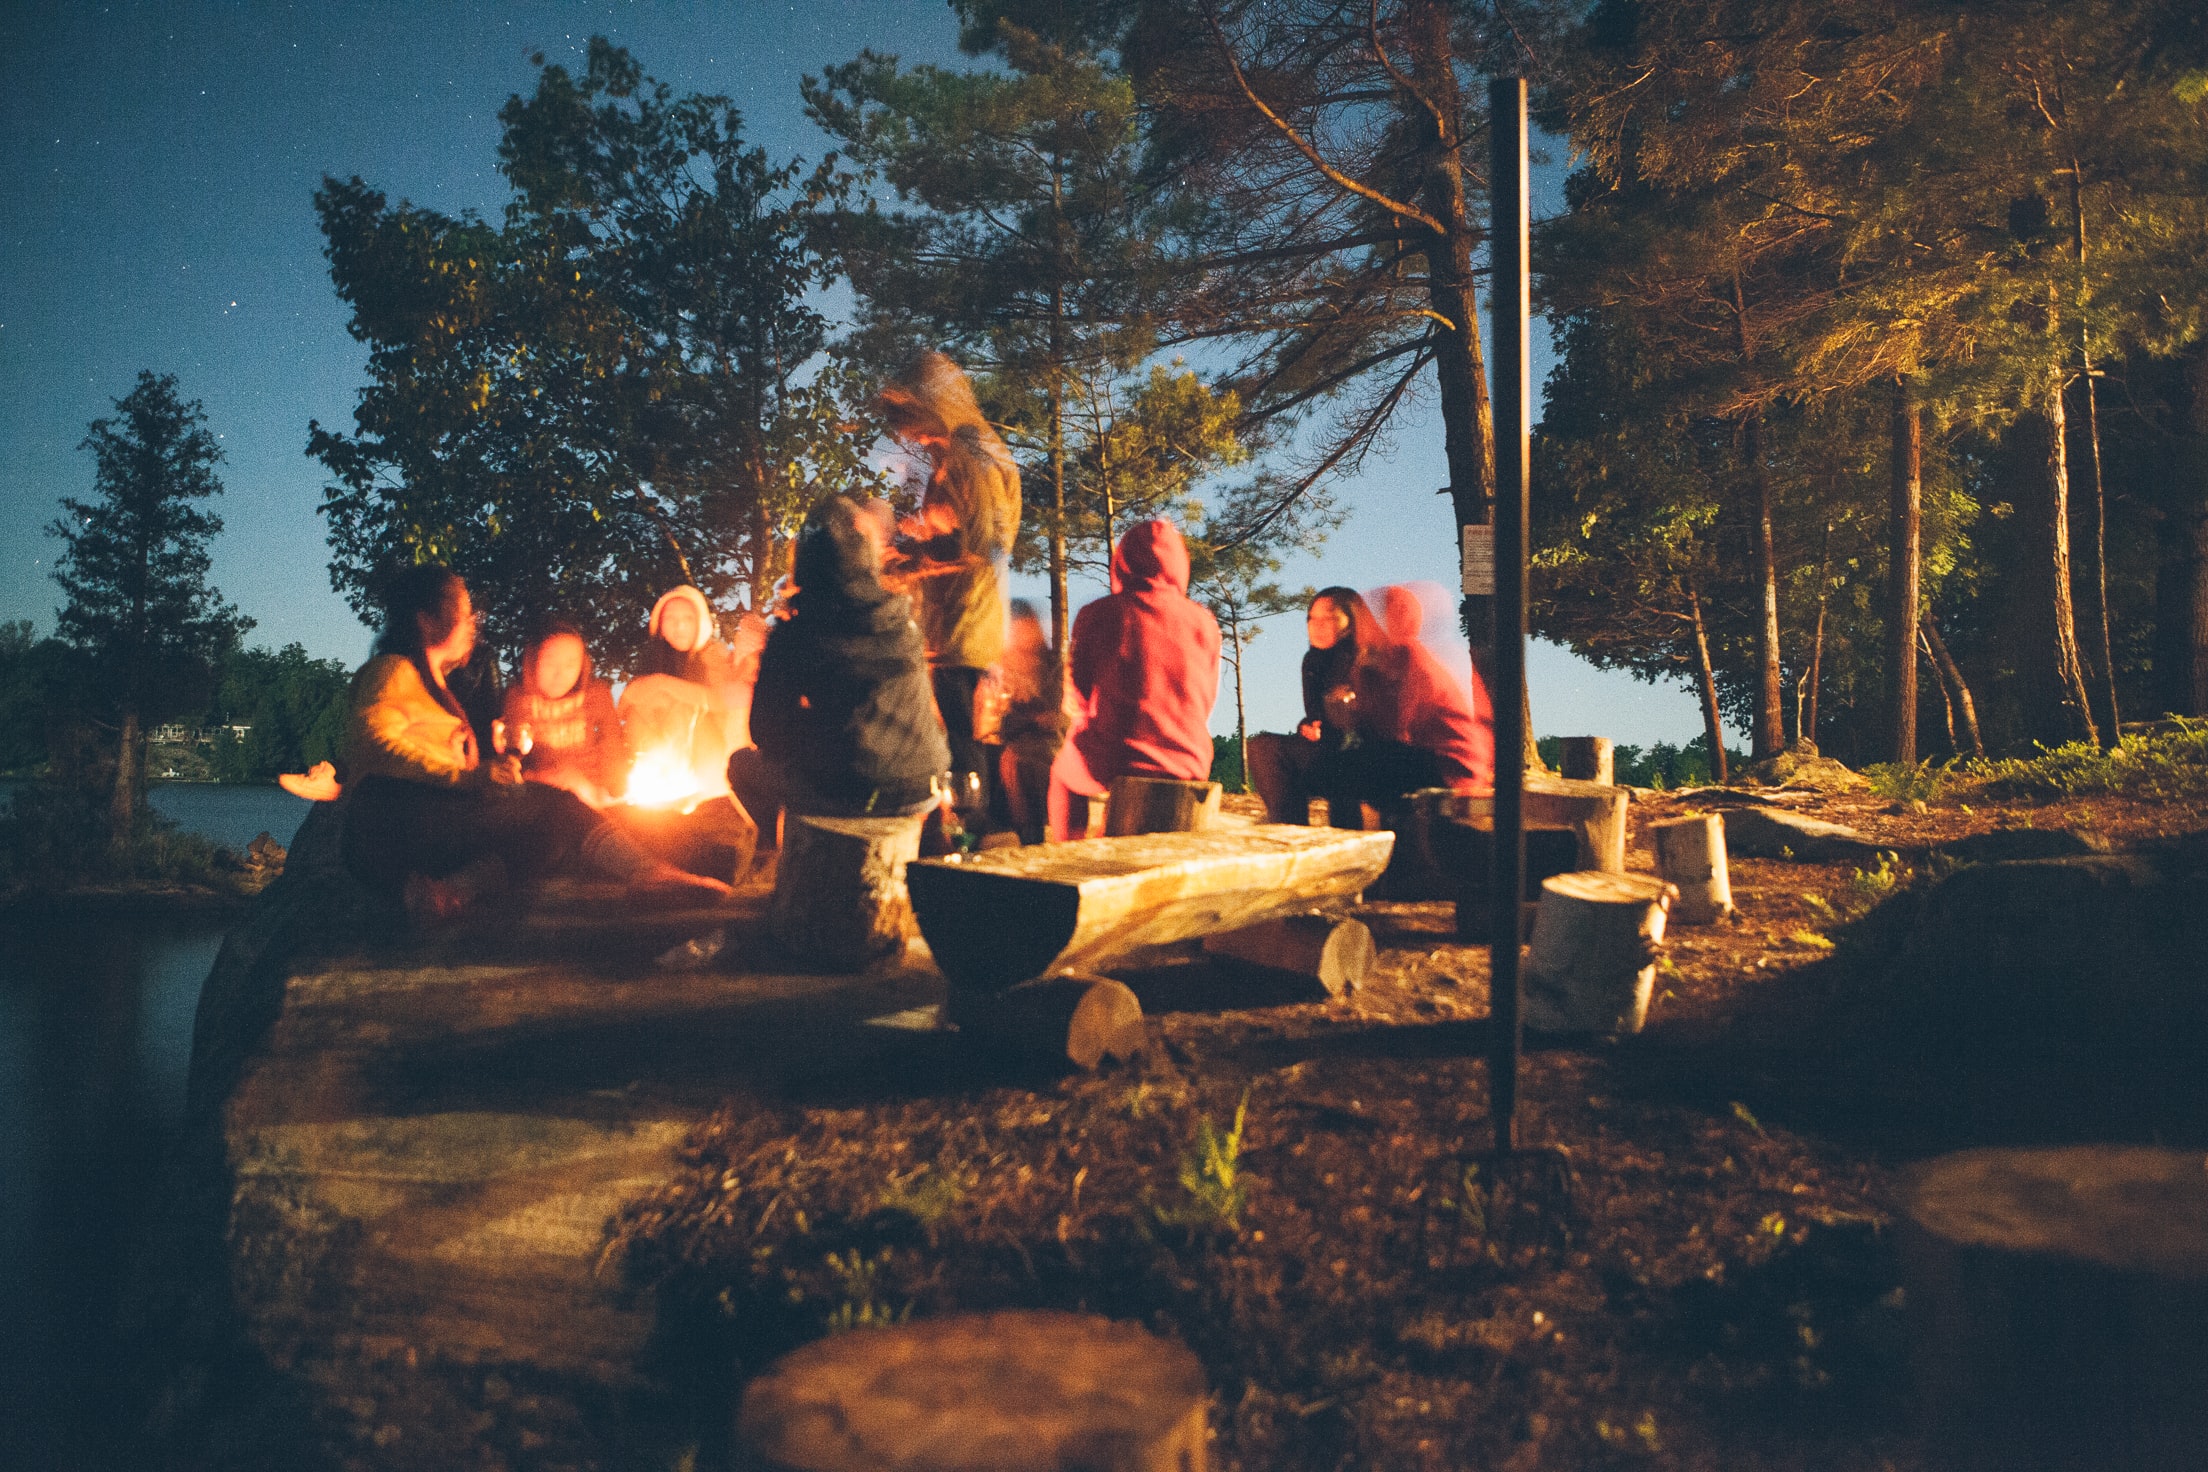 Group sitting around campfire at night